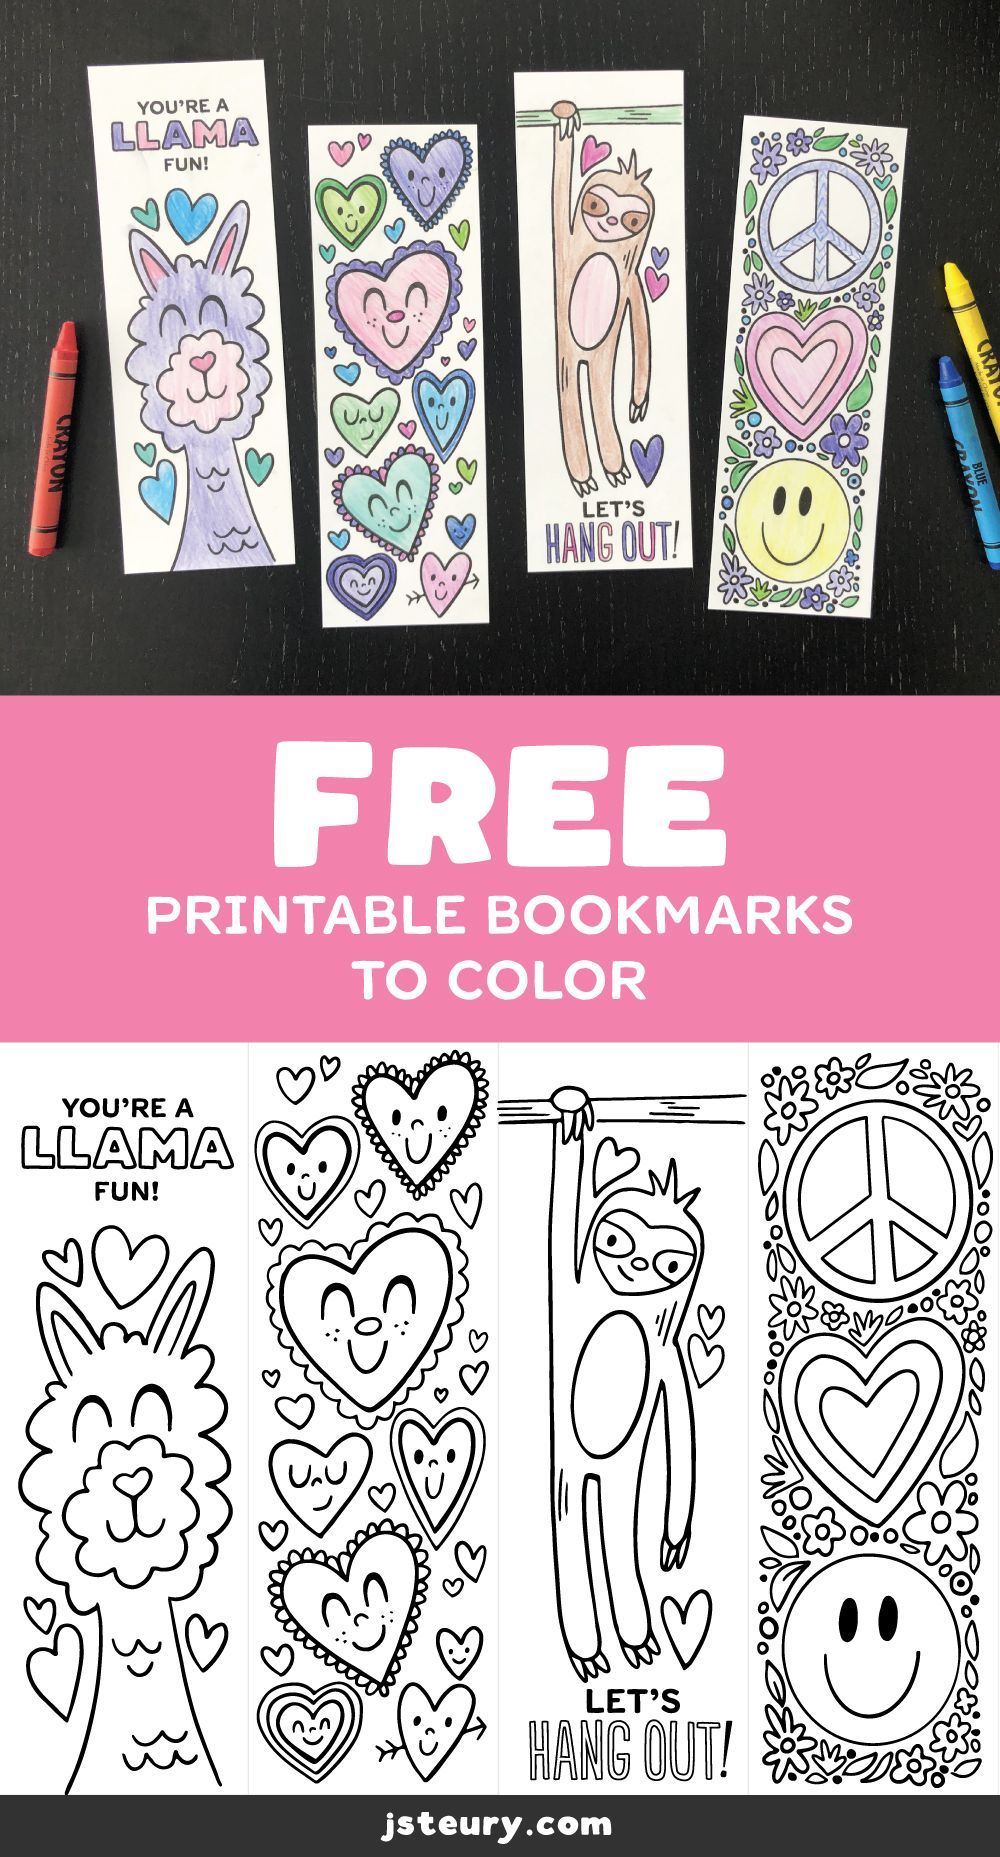 Free Coloring Bookmarks - Free Coloring Bookmarks -   17 diy Kids bookmarks ideas